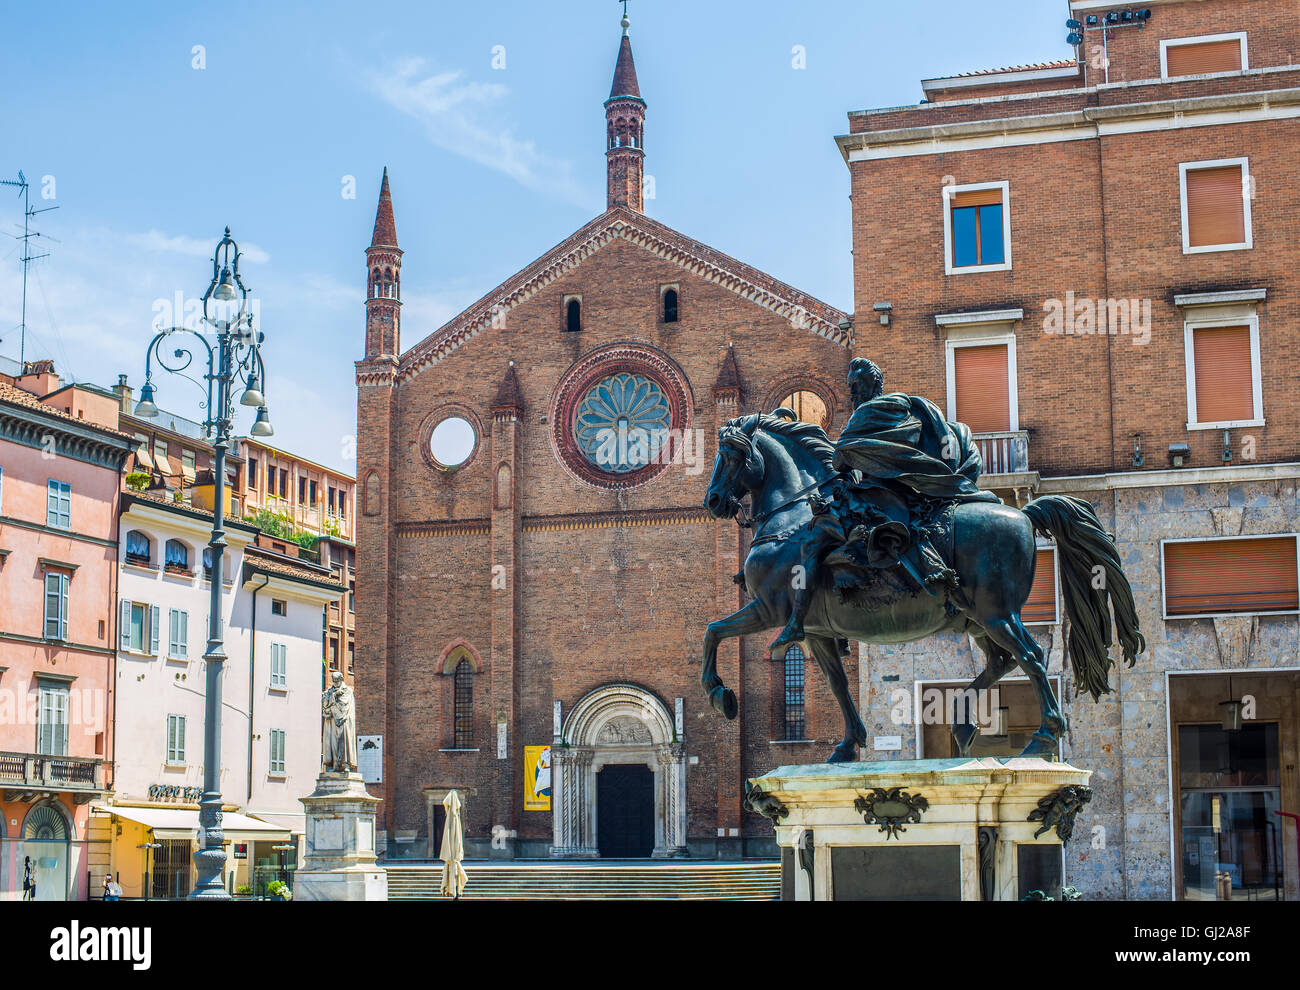 Chiesa di San Francesco iglesia y la estatua ecuestre de Alessandro Farnese en Piazza Cavalli de Piacenza. Italia. Foto de stock